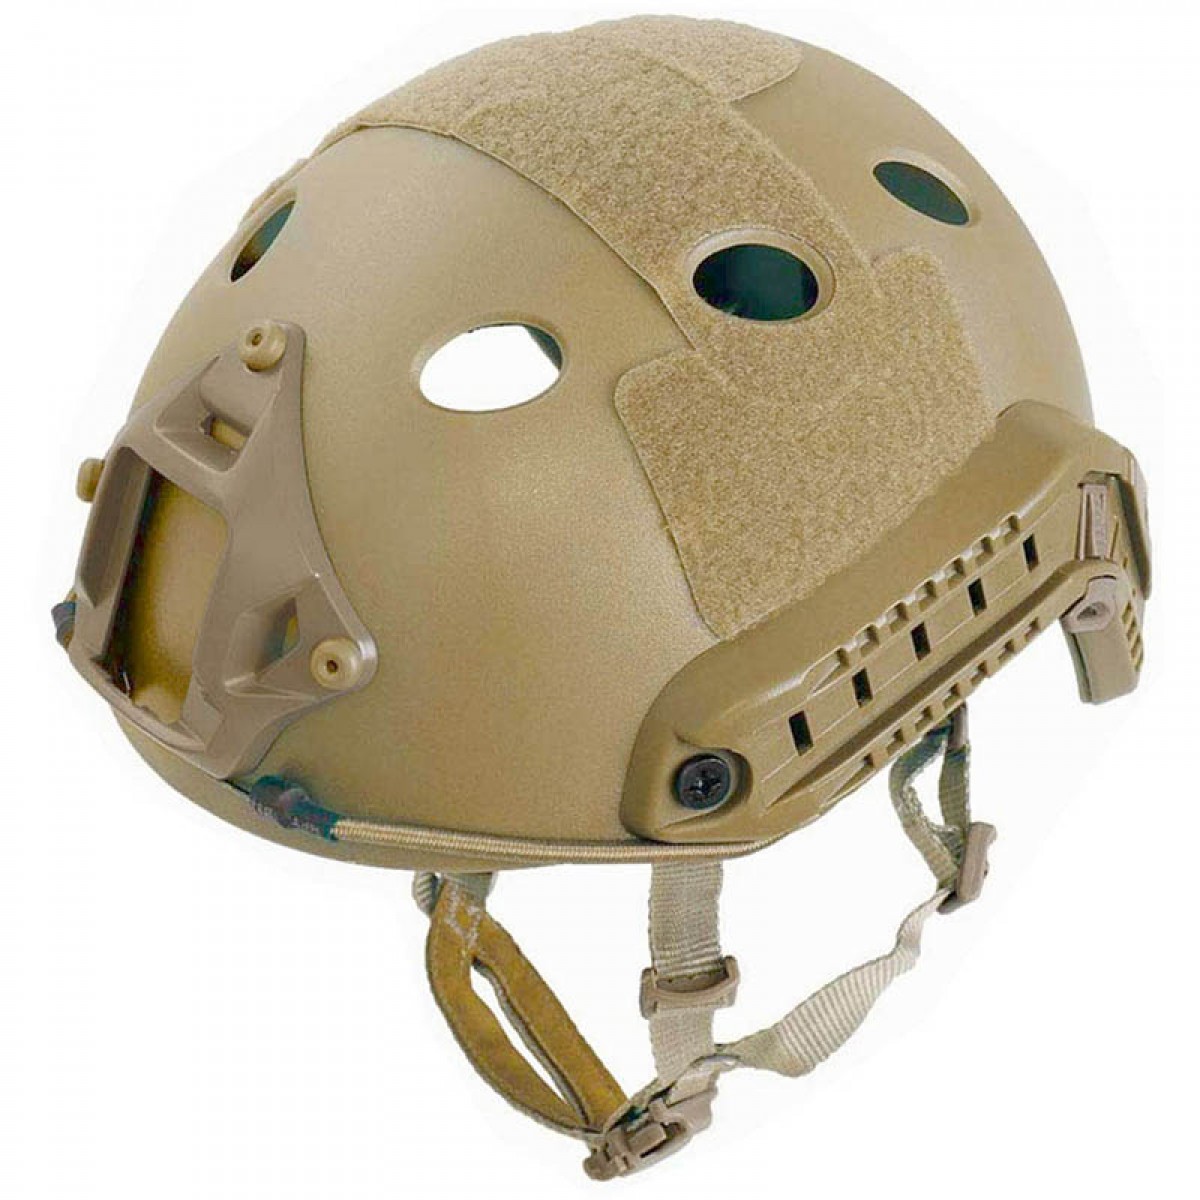 SHENKEL FAST HELMET ファストヘルメット PJタイプ 4点式あご紐ヘルメット  レプリカ 米軍装備 サバゲー BK/OD/TAN